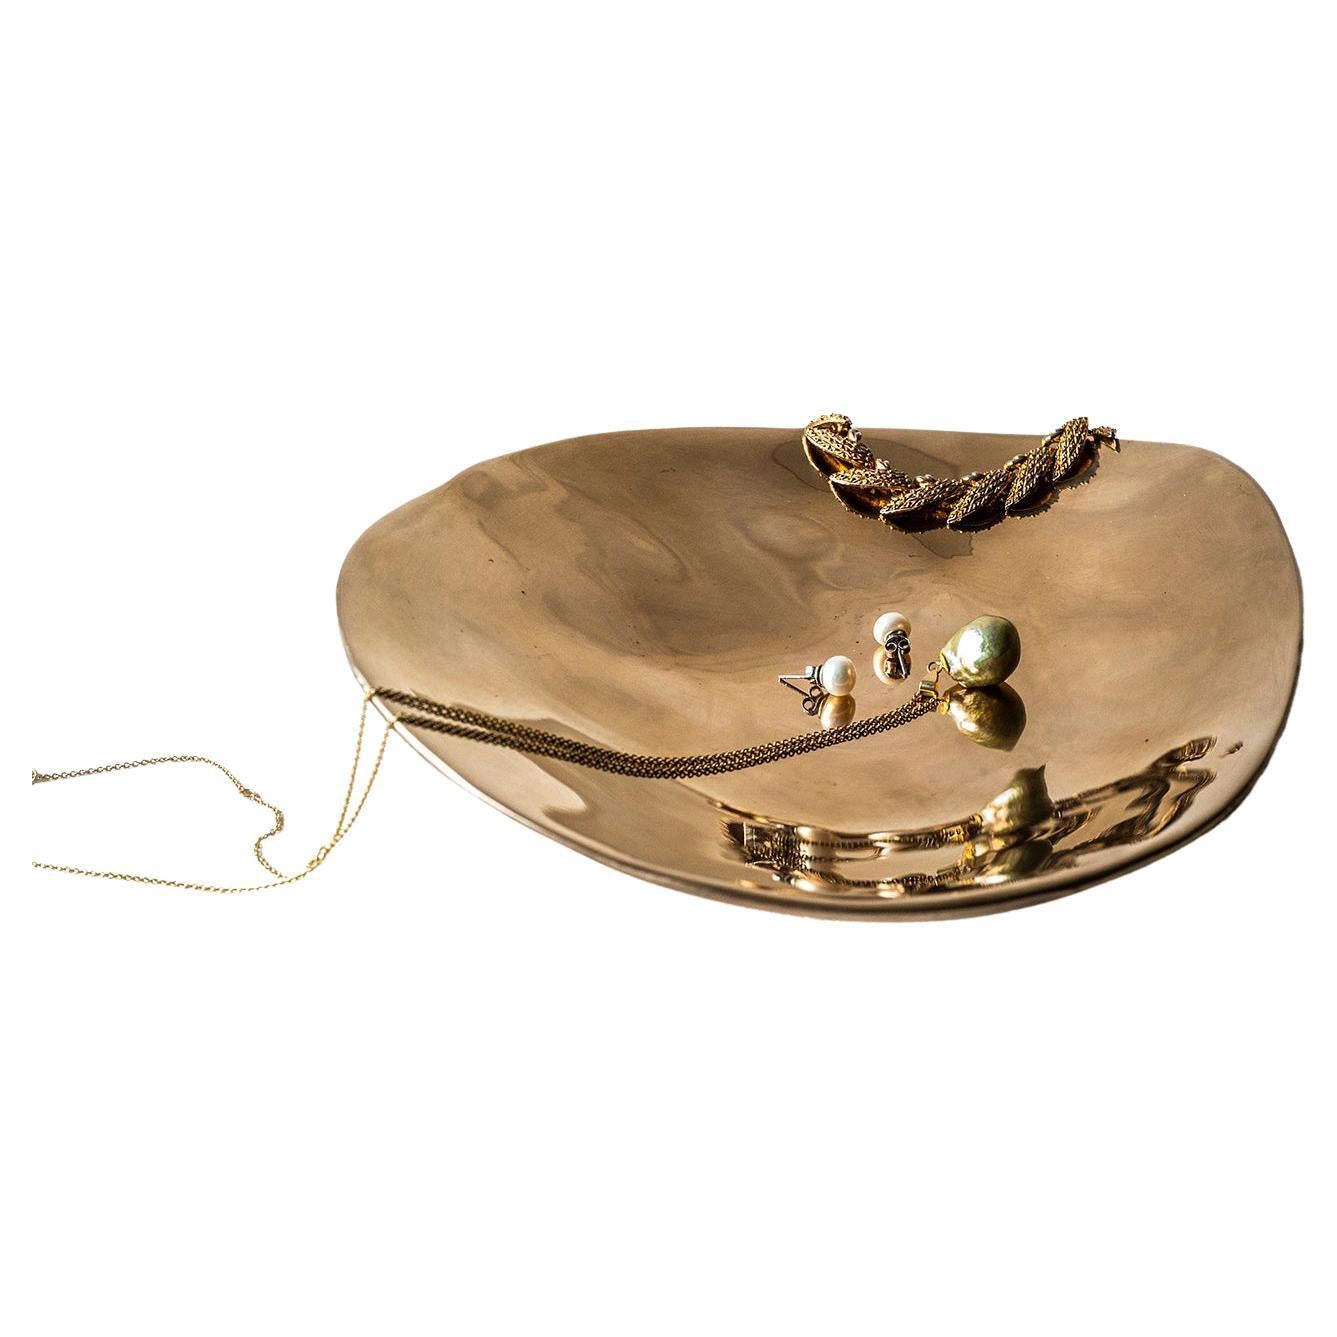 Bijoux Bowl / Conversation Piece / Handcasted Solid Bronze Tray